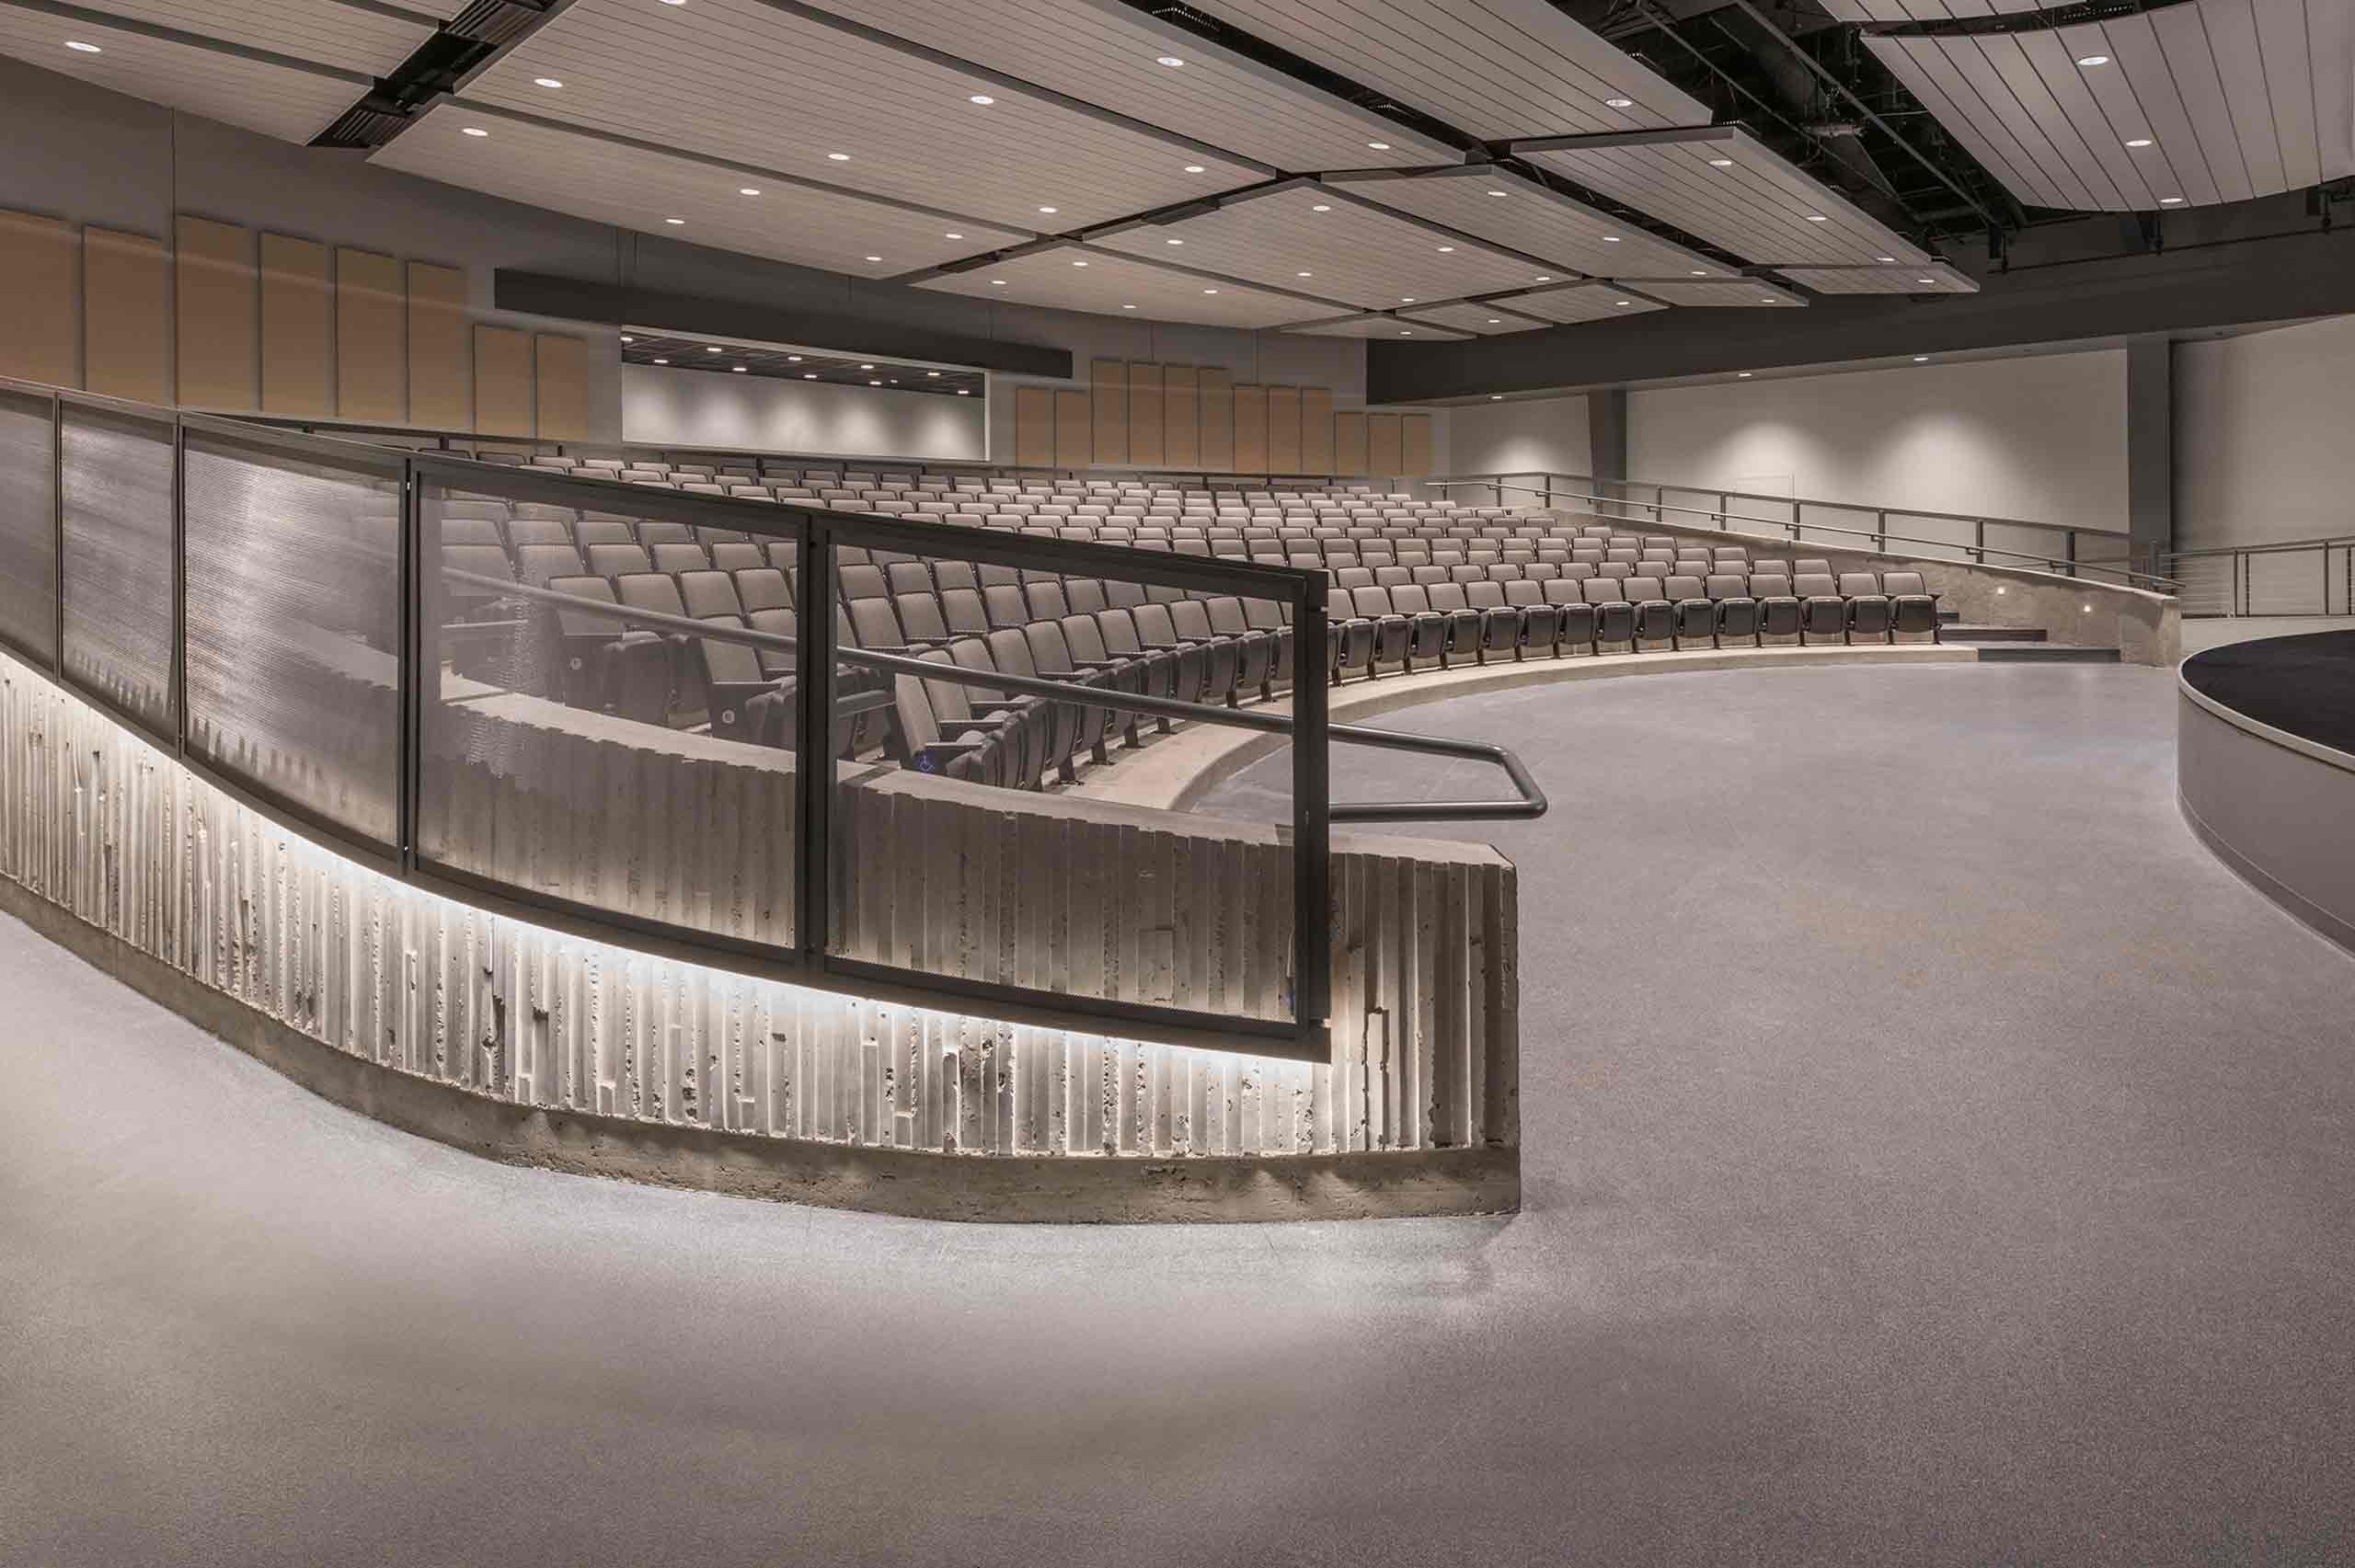 indoor community theater audience seats